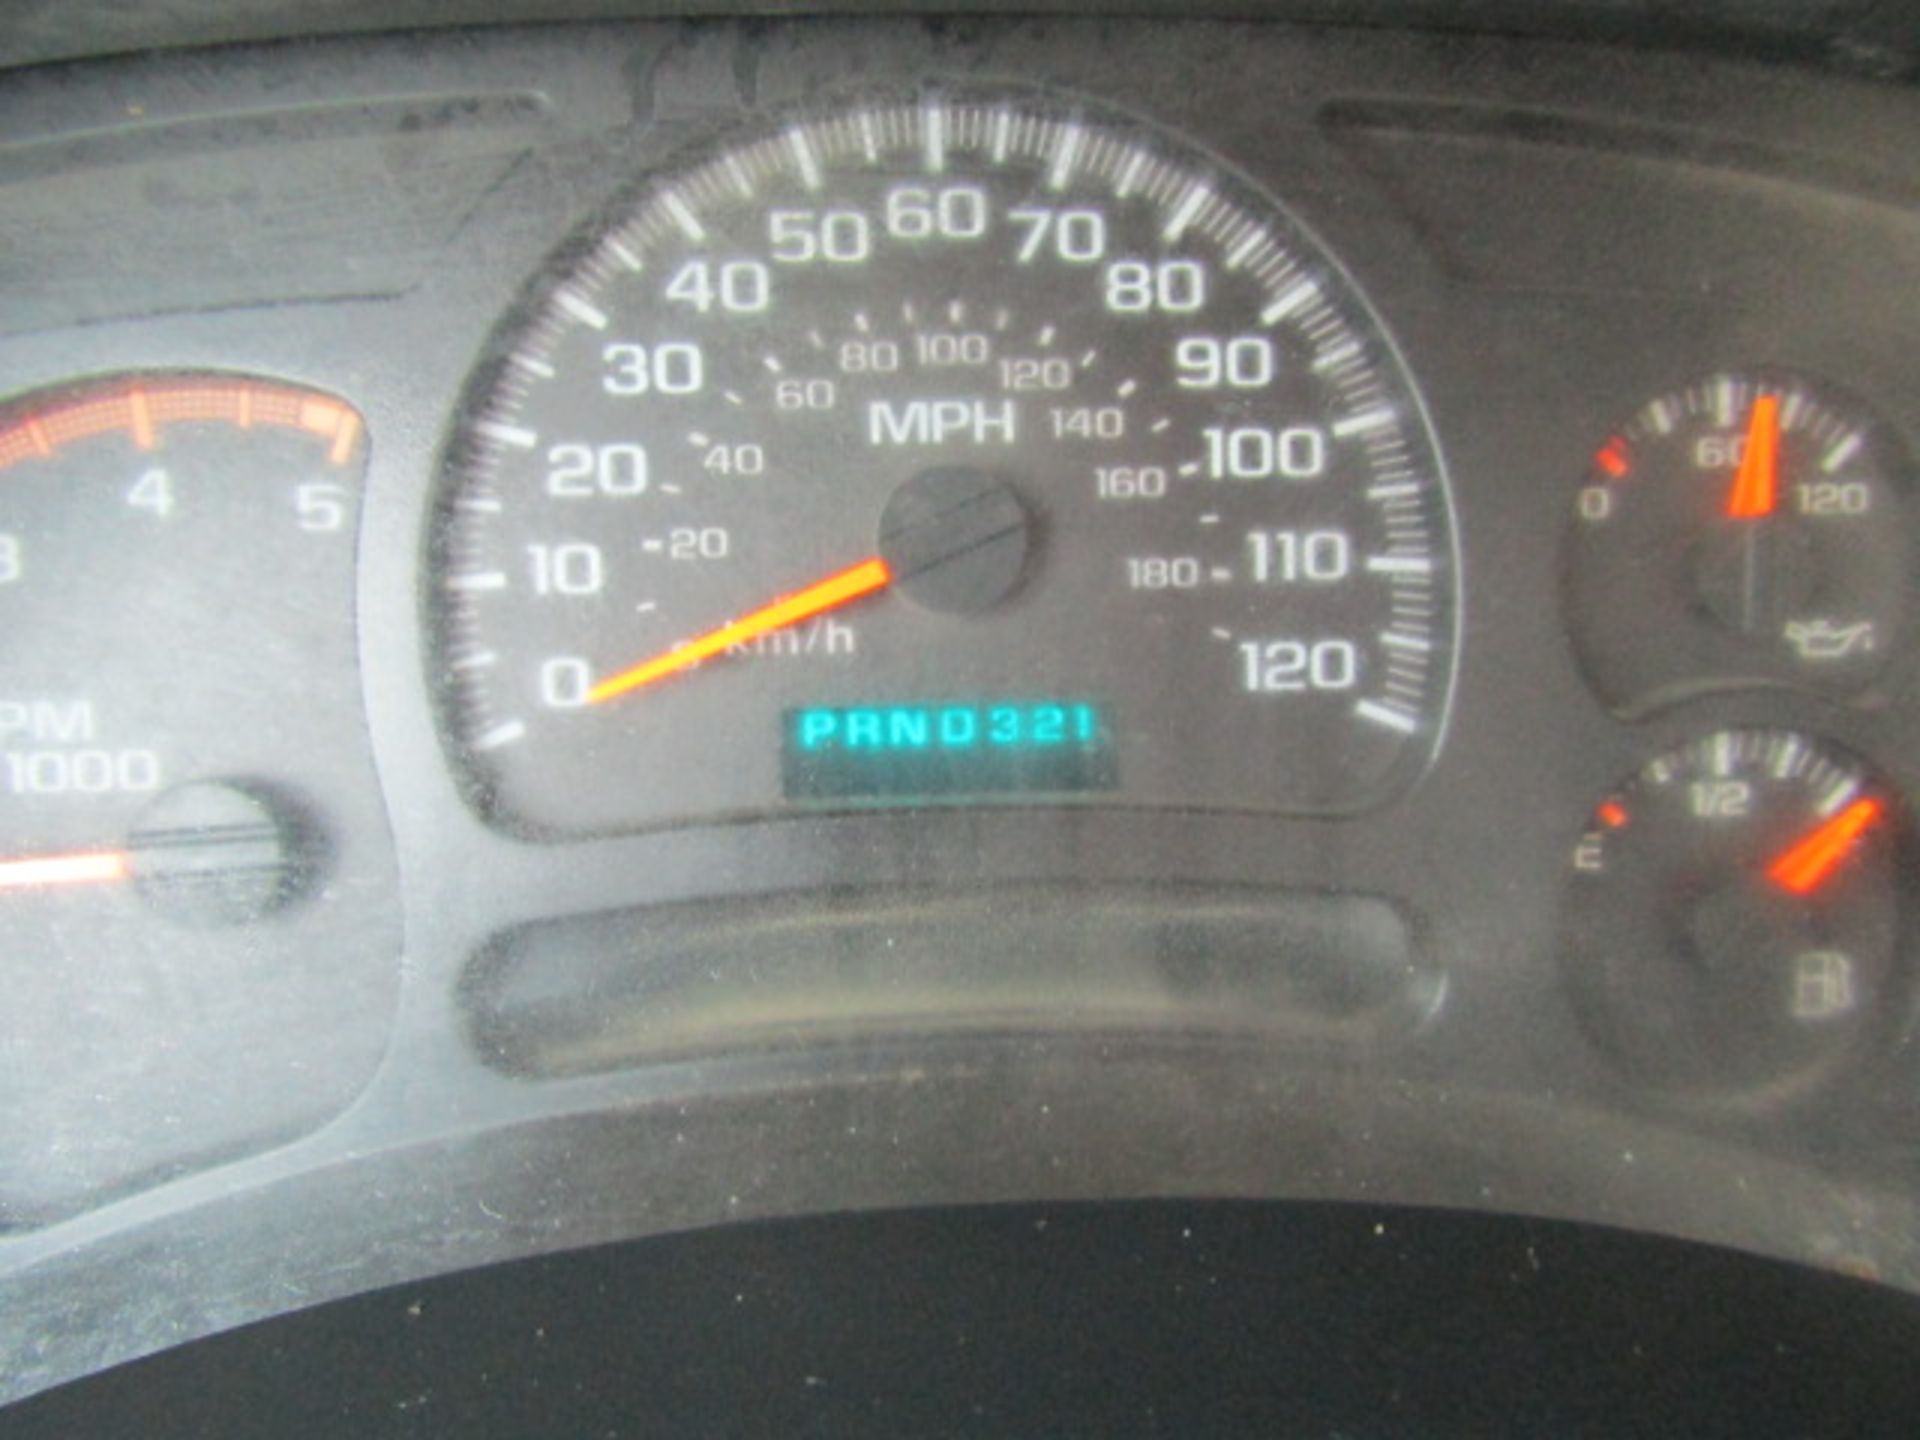 2003 Chevy Silverado K2500 Club Cab Truck LongBed, 4 x 4, Vin #1GCHK29113E155250, Automatic 4x4 - Image 6 of 19